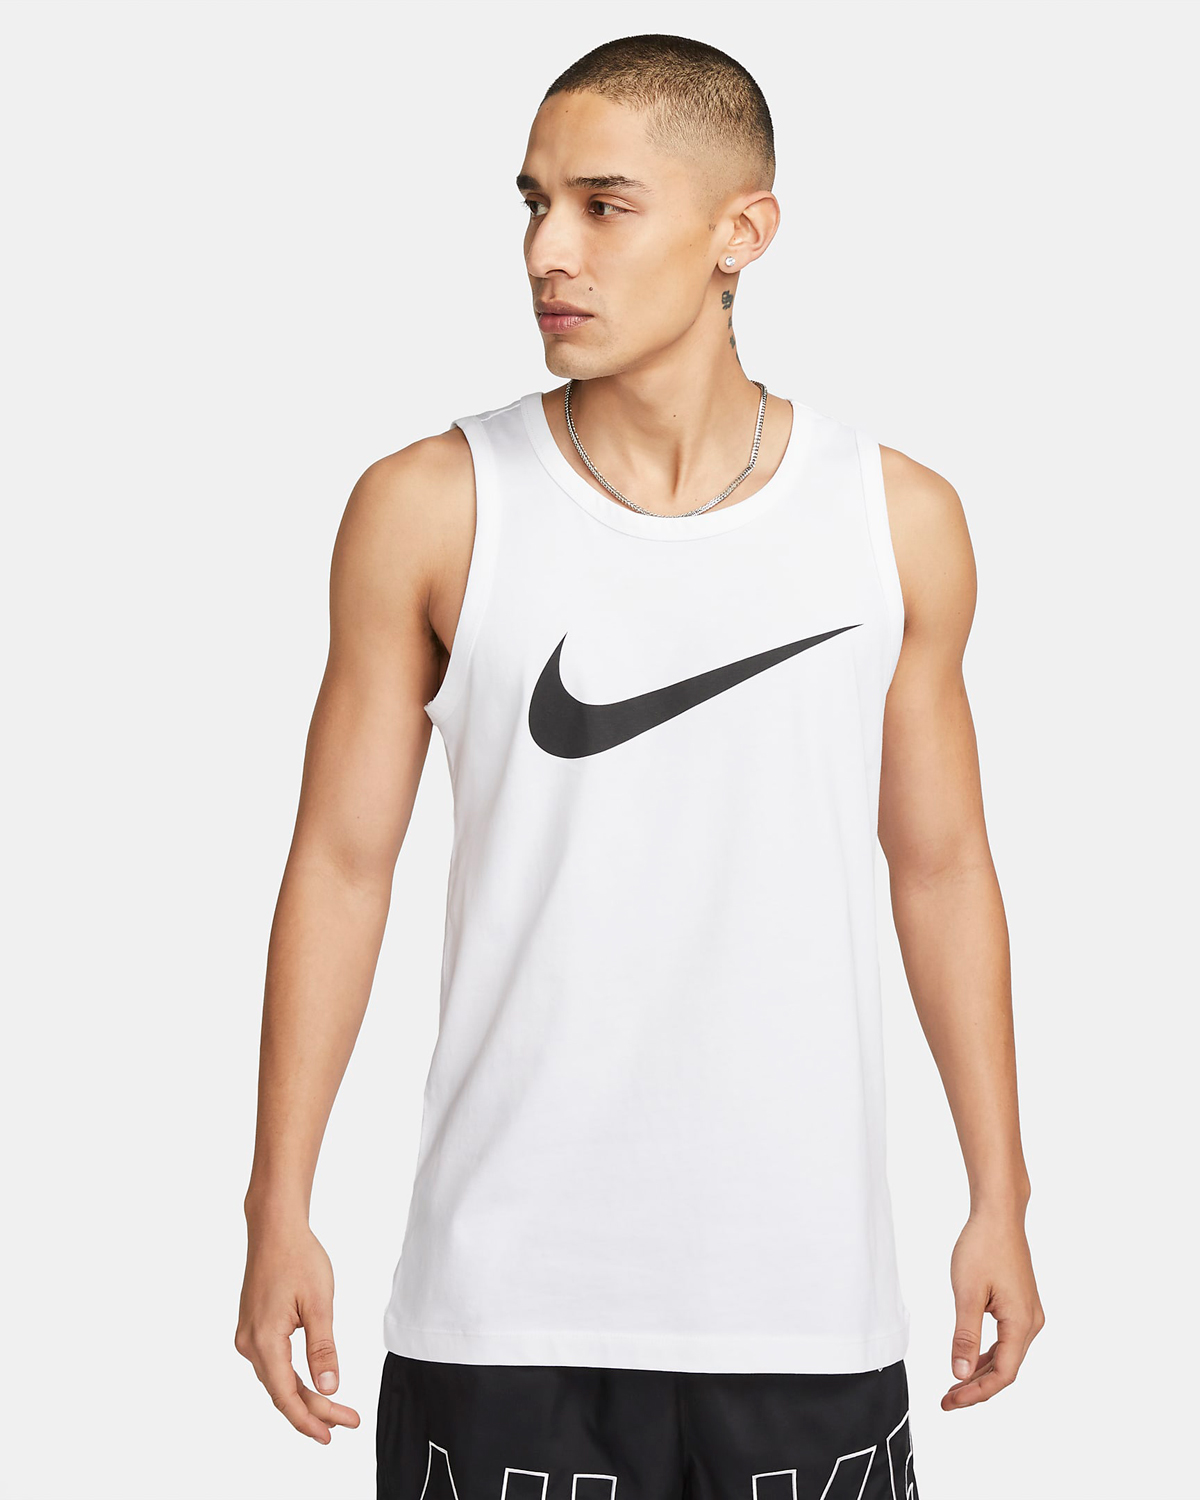 Nike-Sportswear-Swoosh-Tank-Top-White-Black